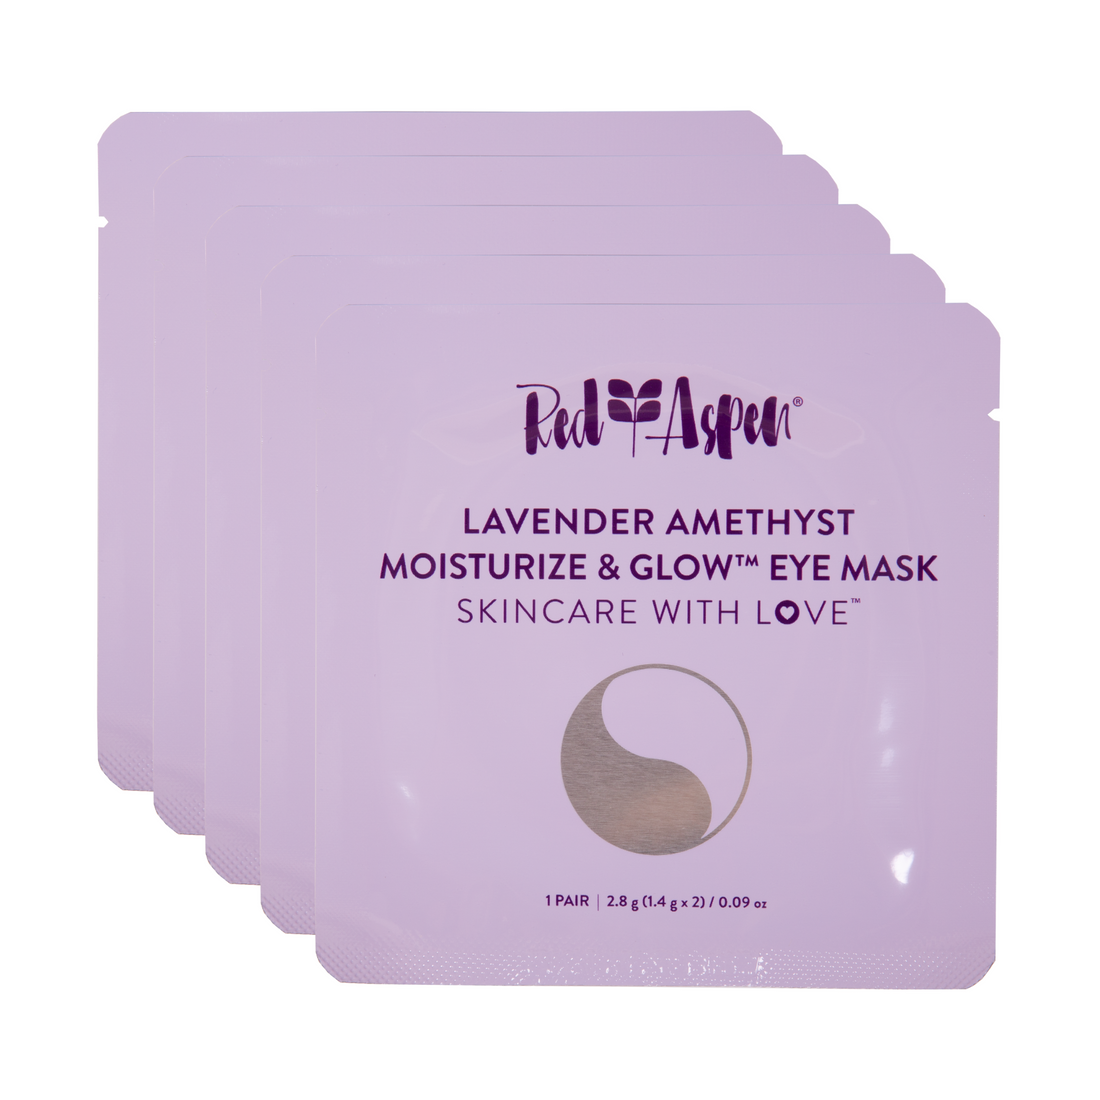 Lavender Amethyst Eye Mask Bundle - 5 Pack